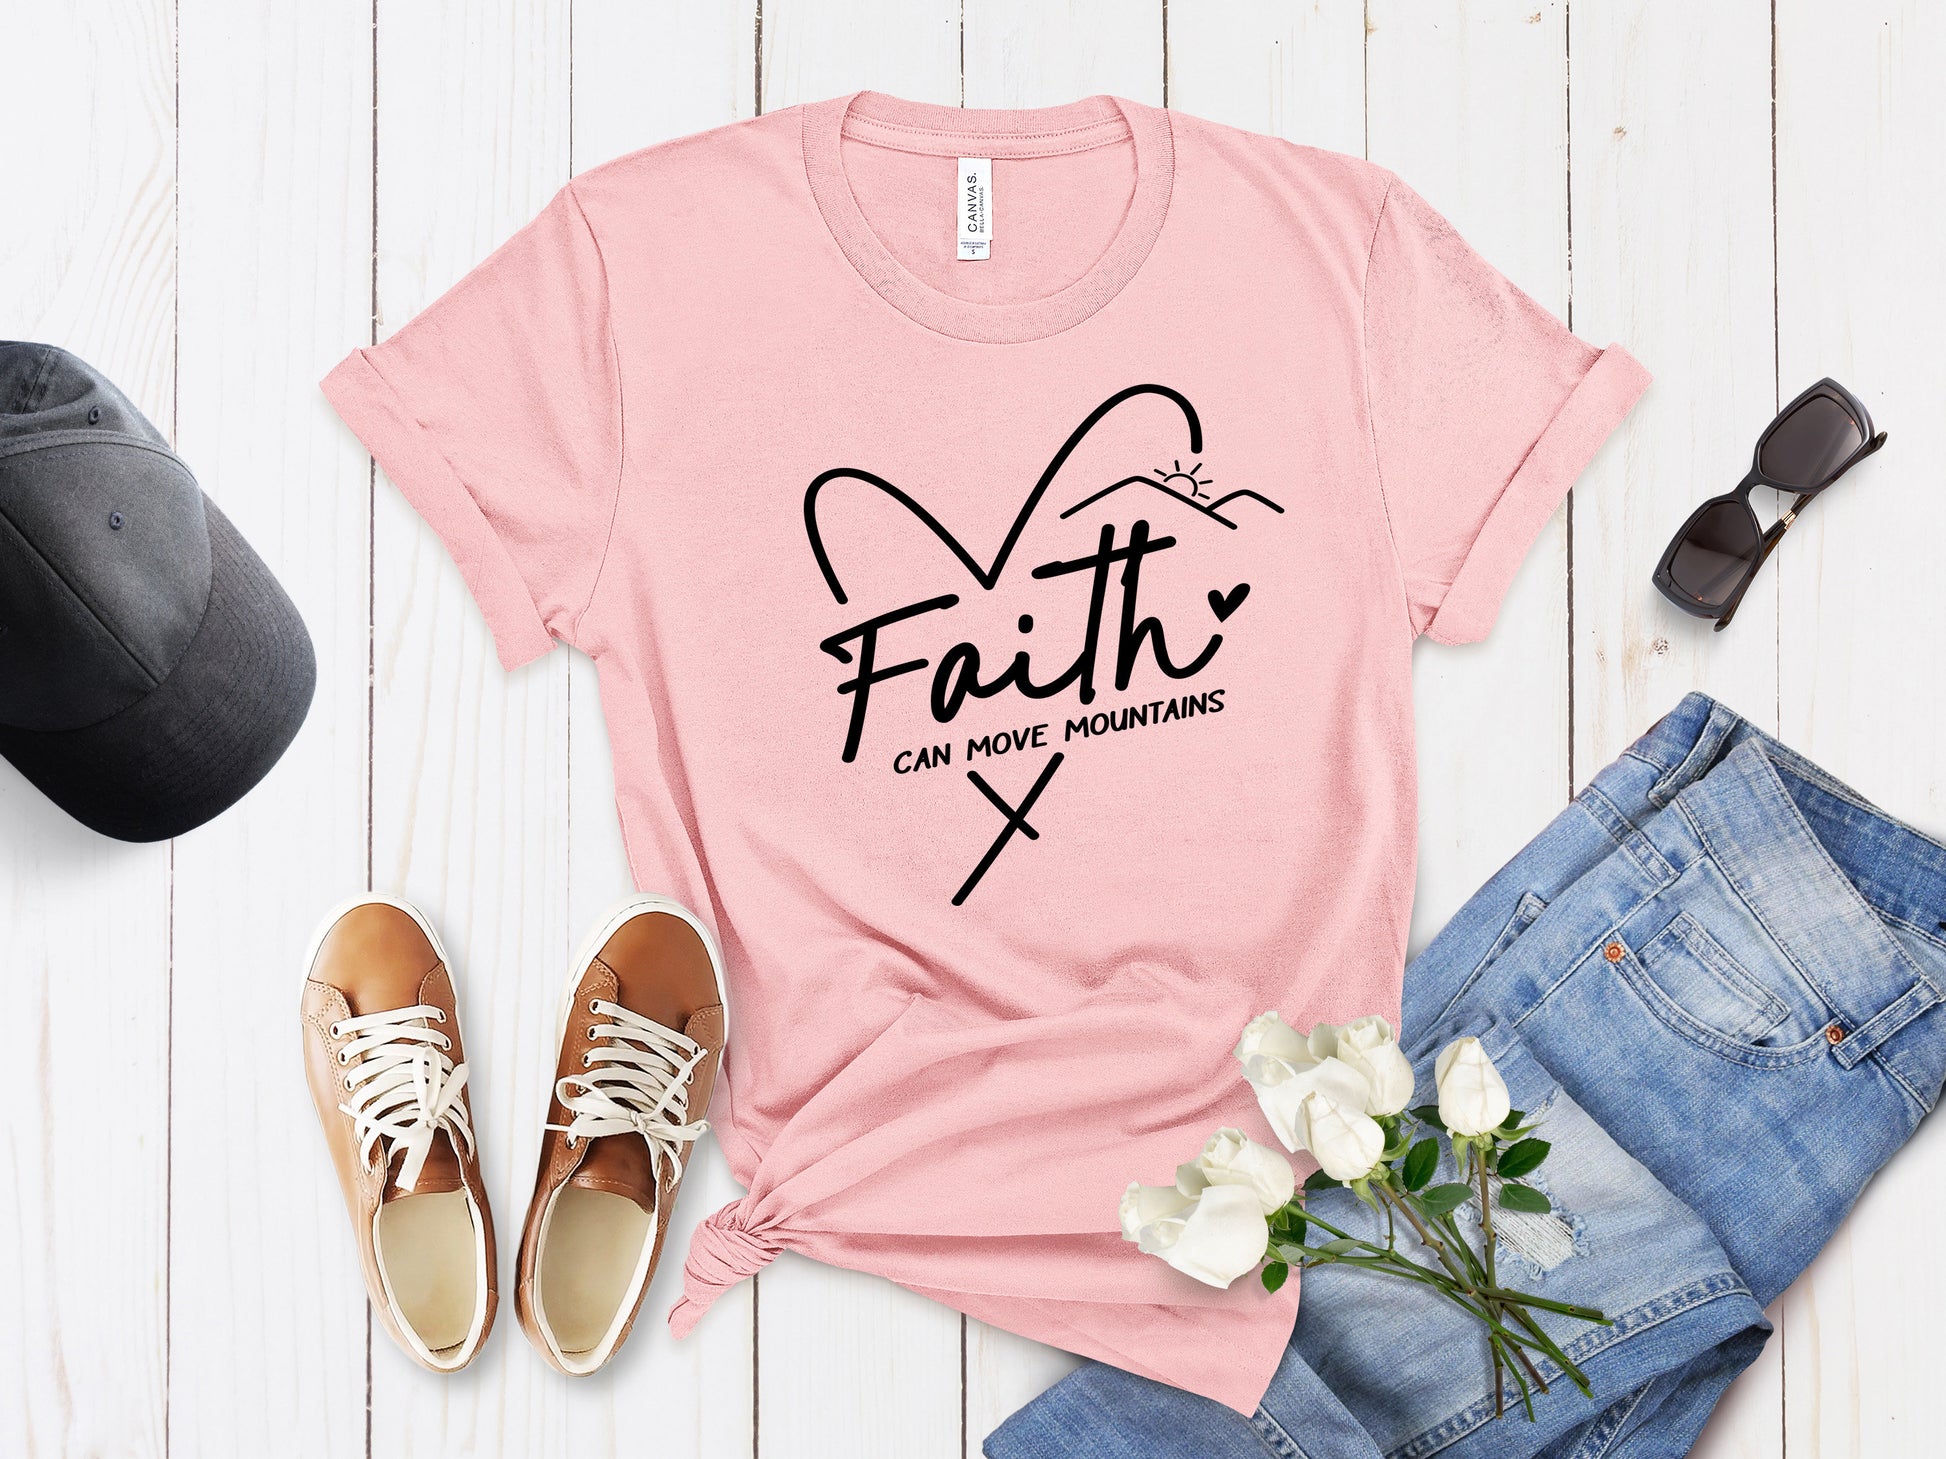 Pink Christian tee shirts